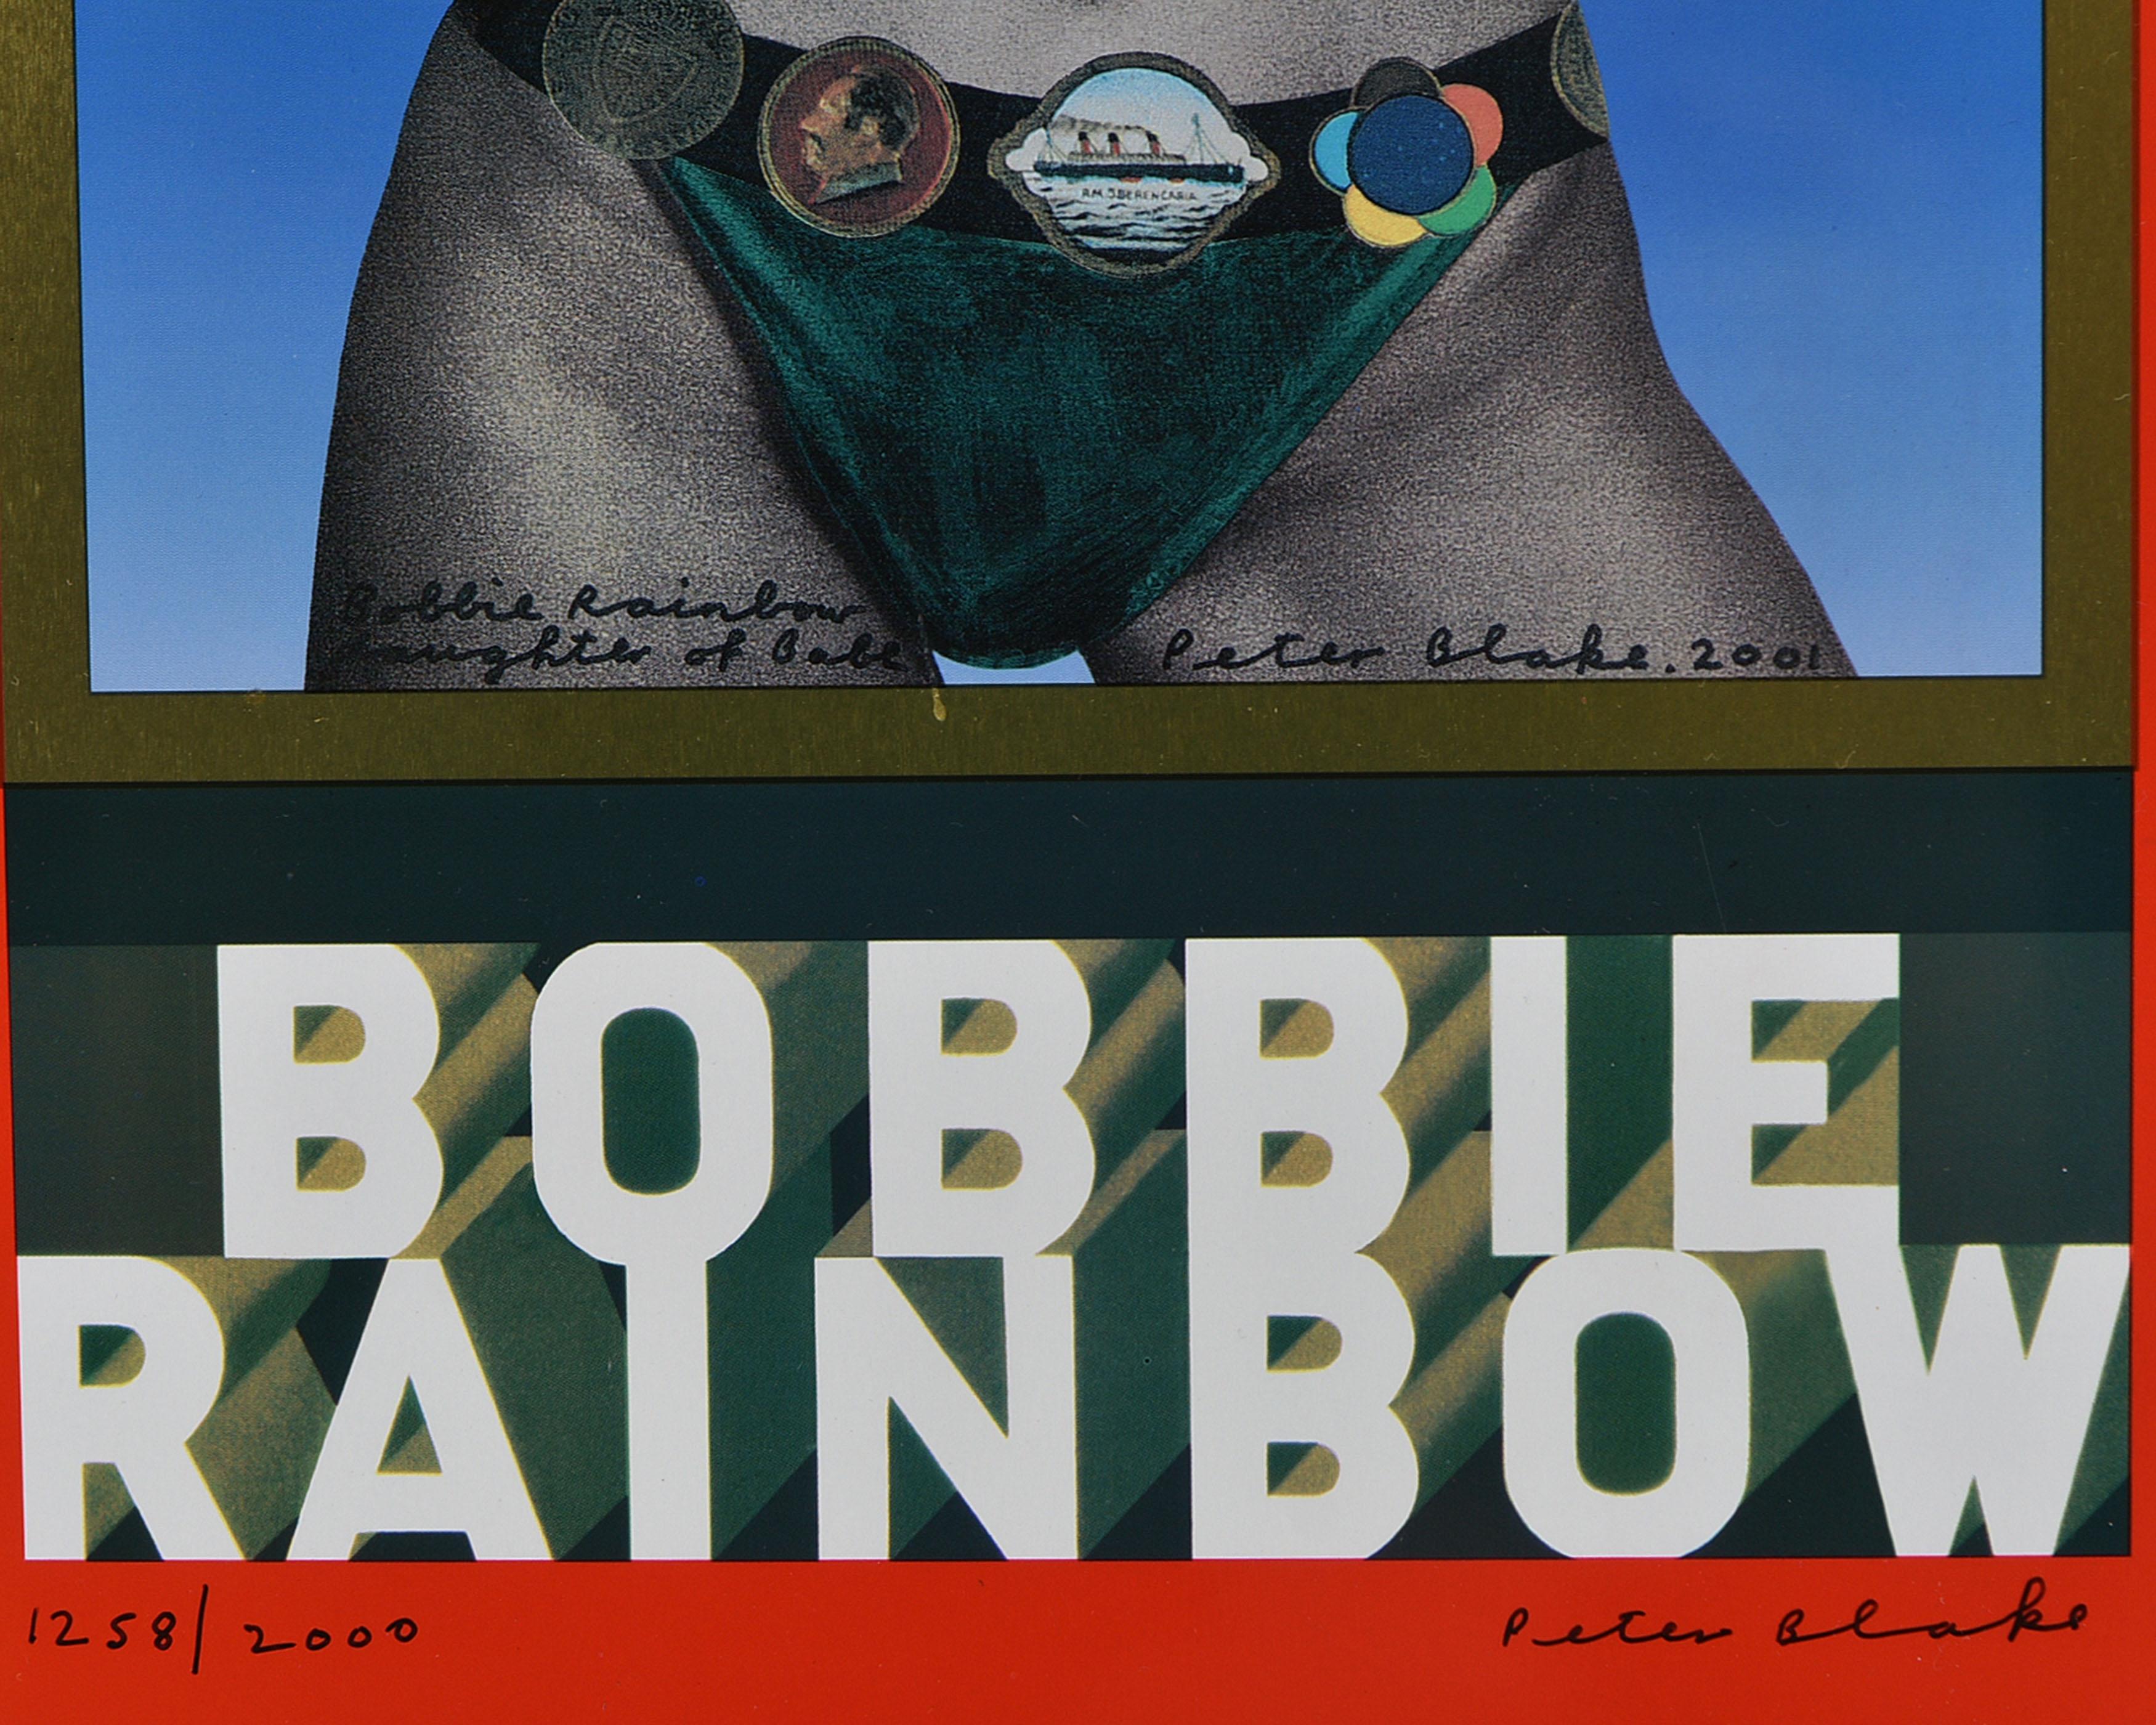 British Bobbie Rainbow by Peter Blake Lithoprint on Tin 2001 Signed Pop Art For Sale